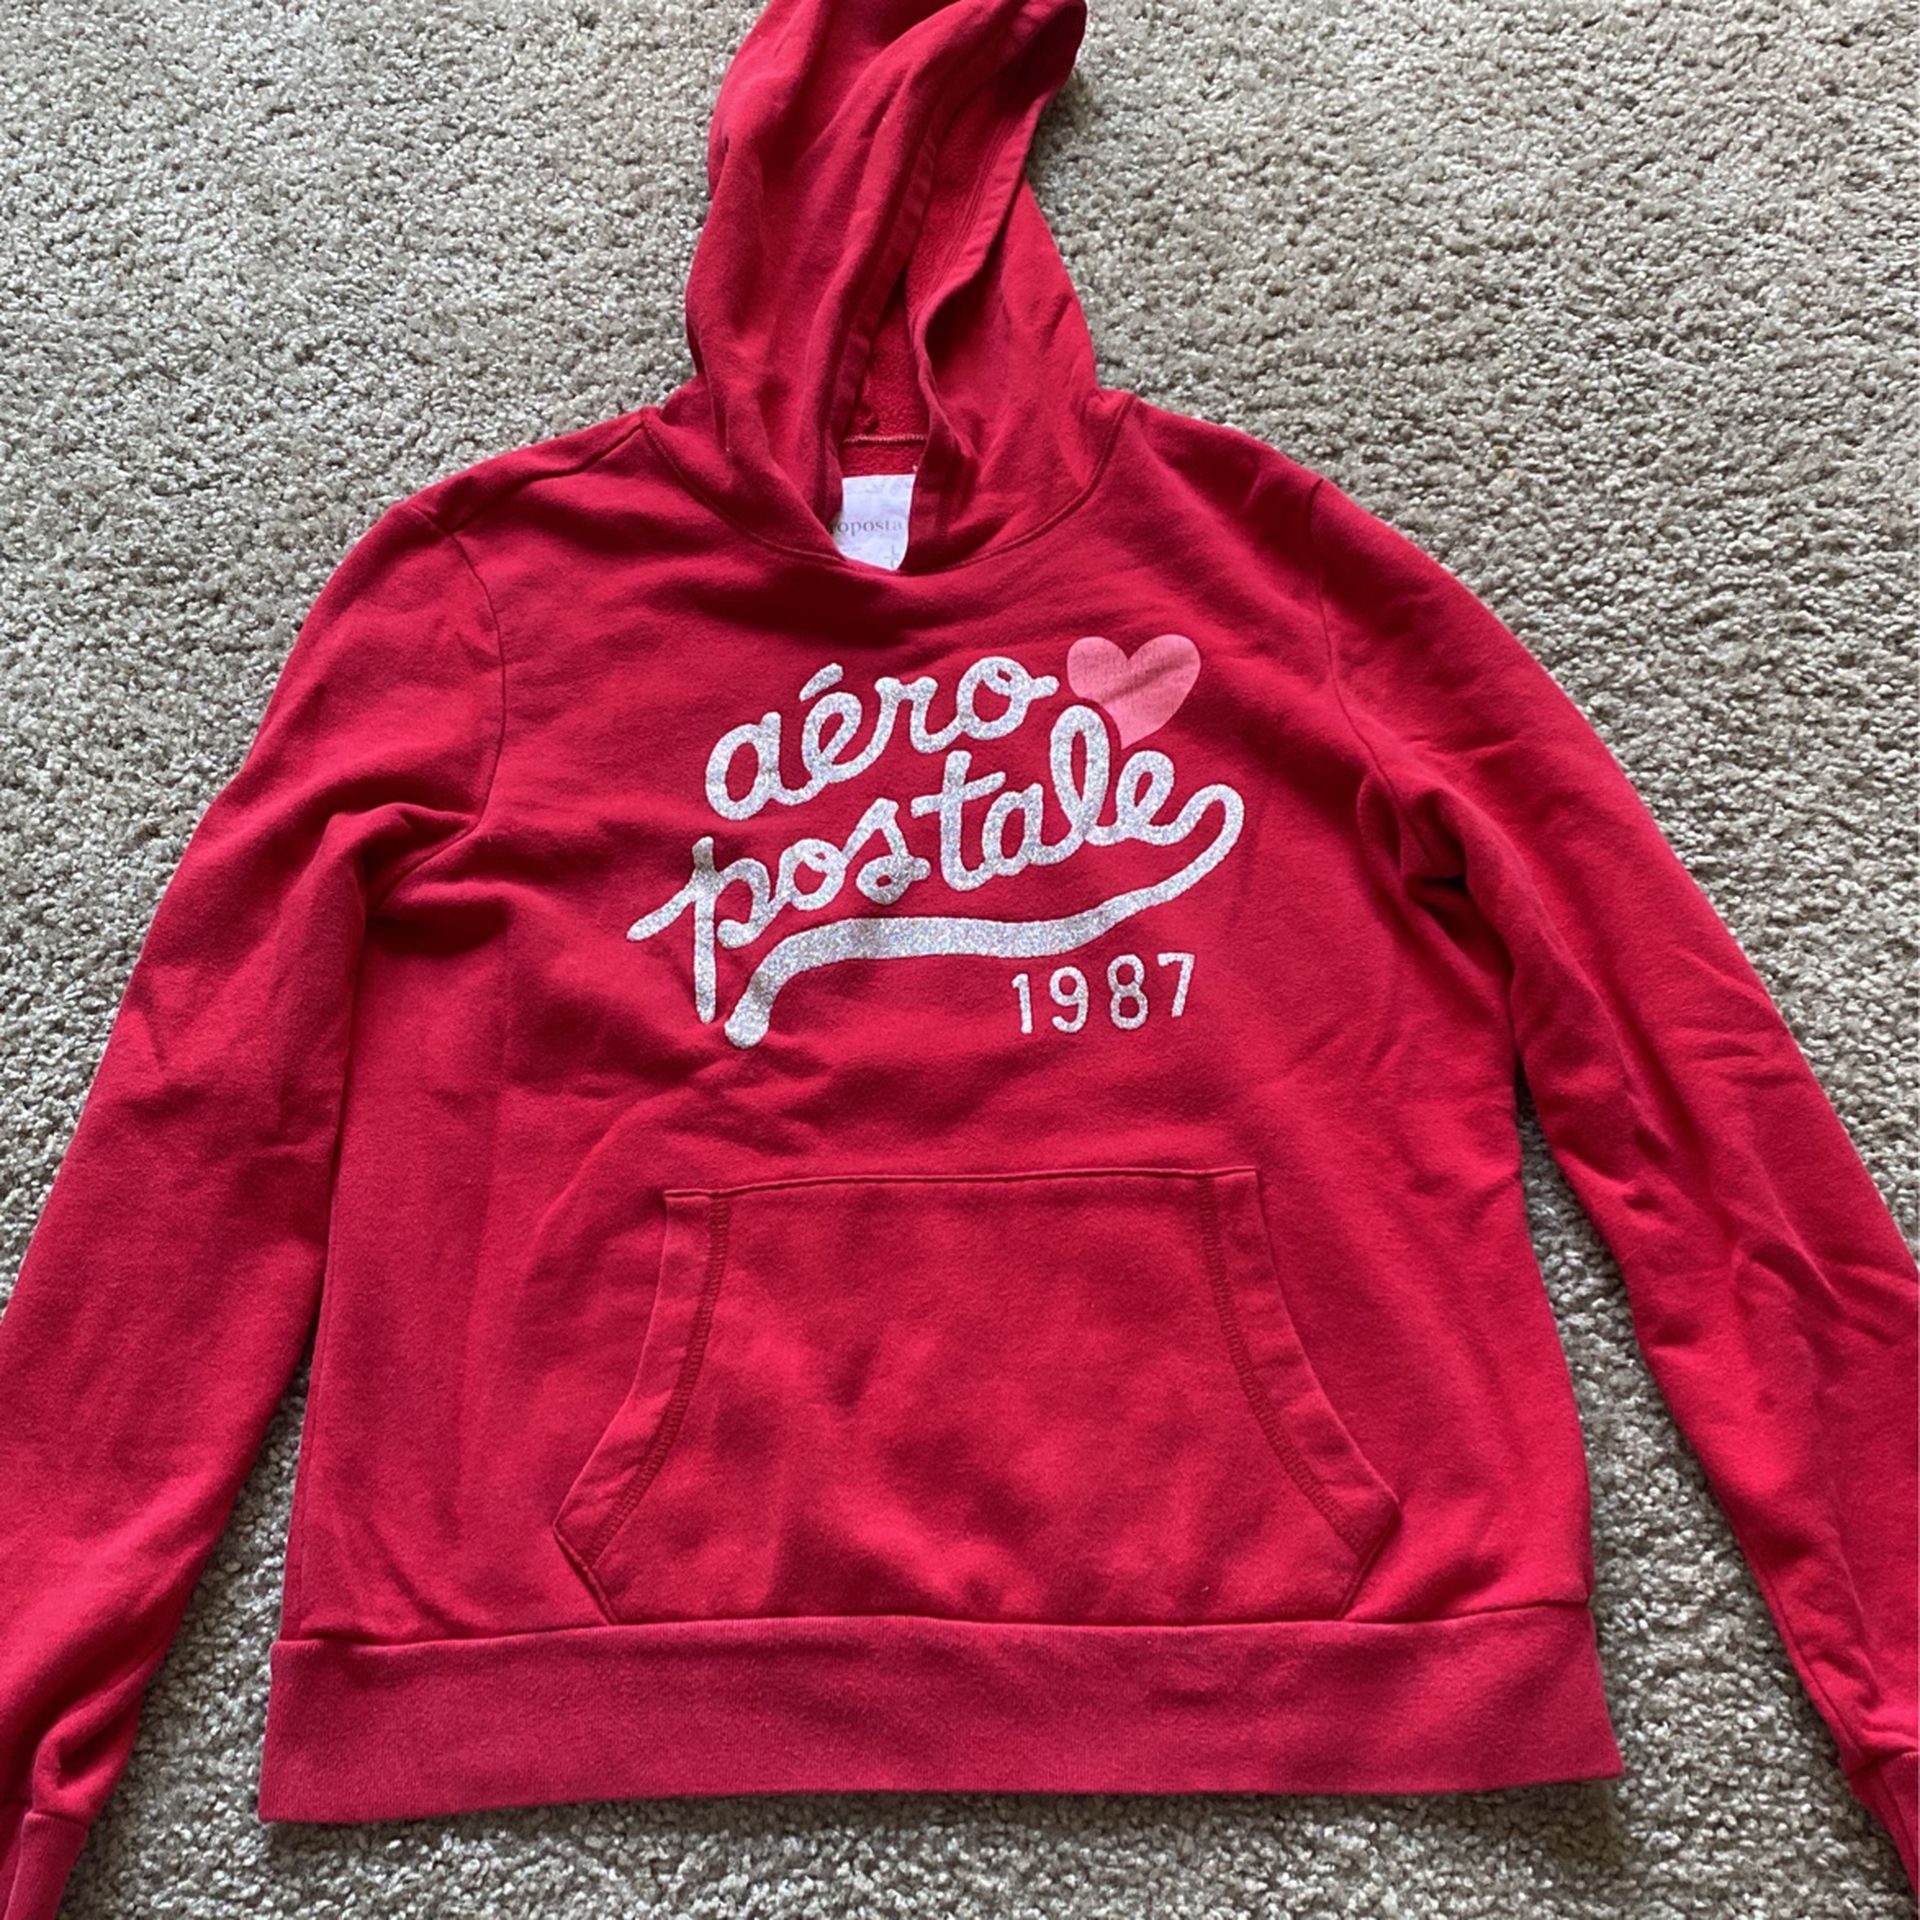 Aero Postale Sweater